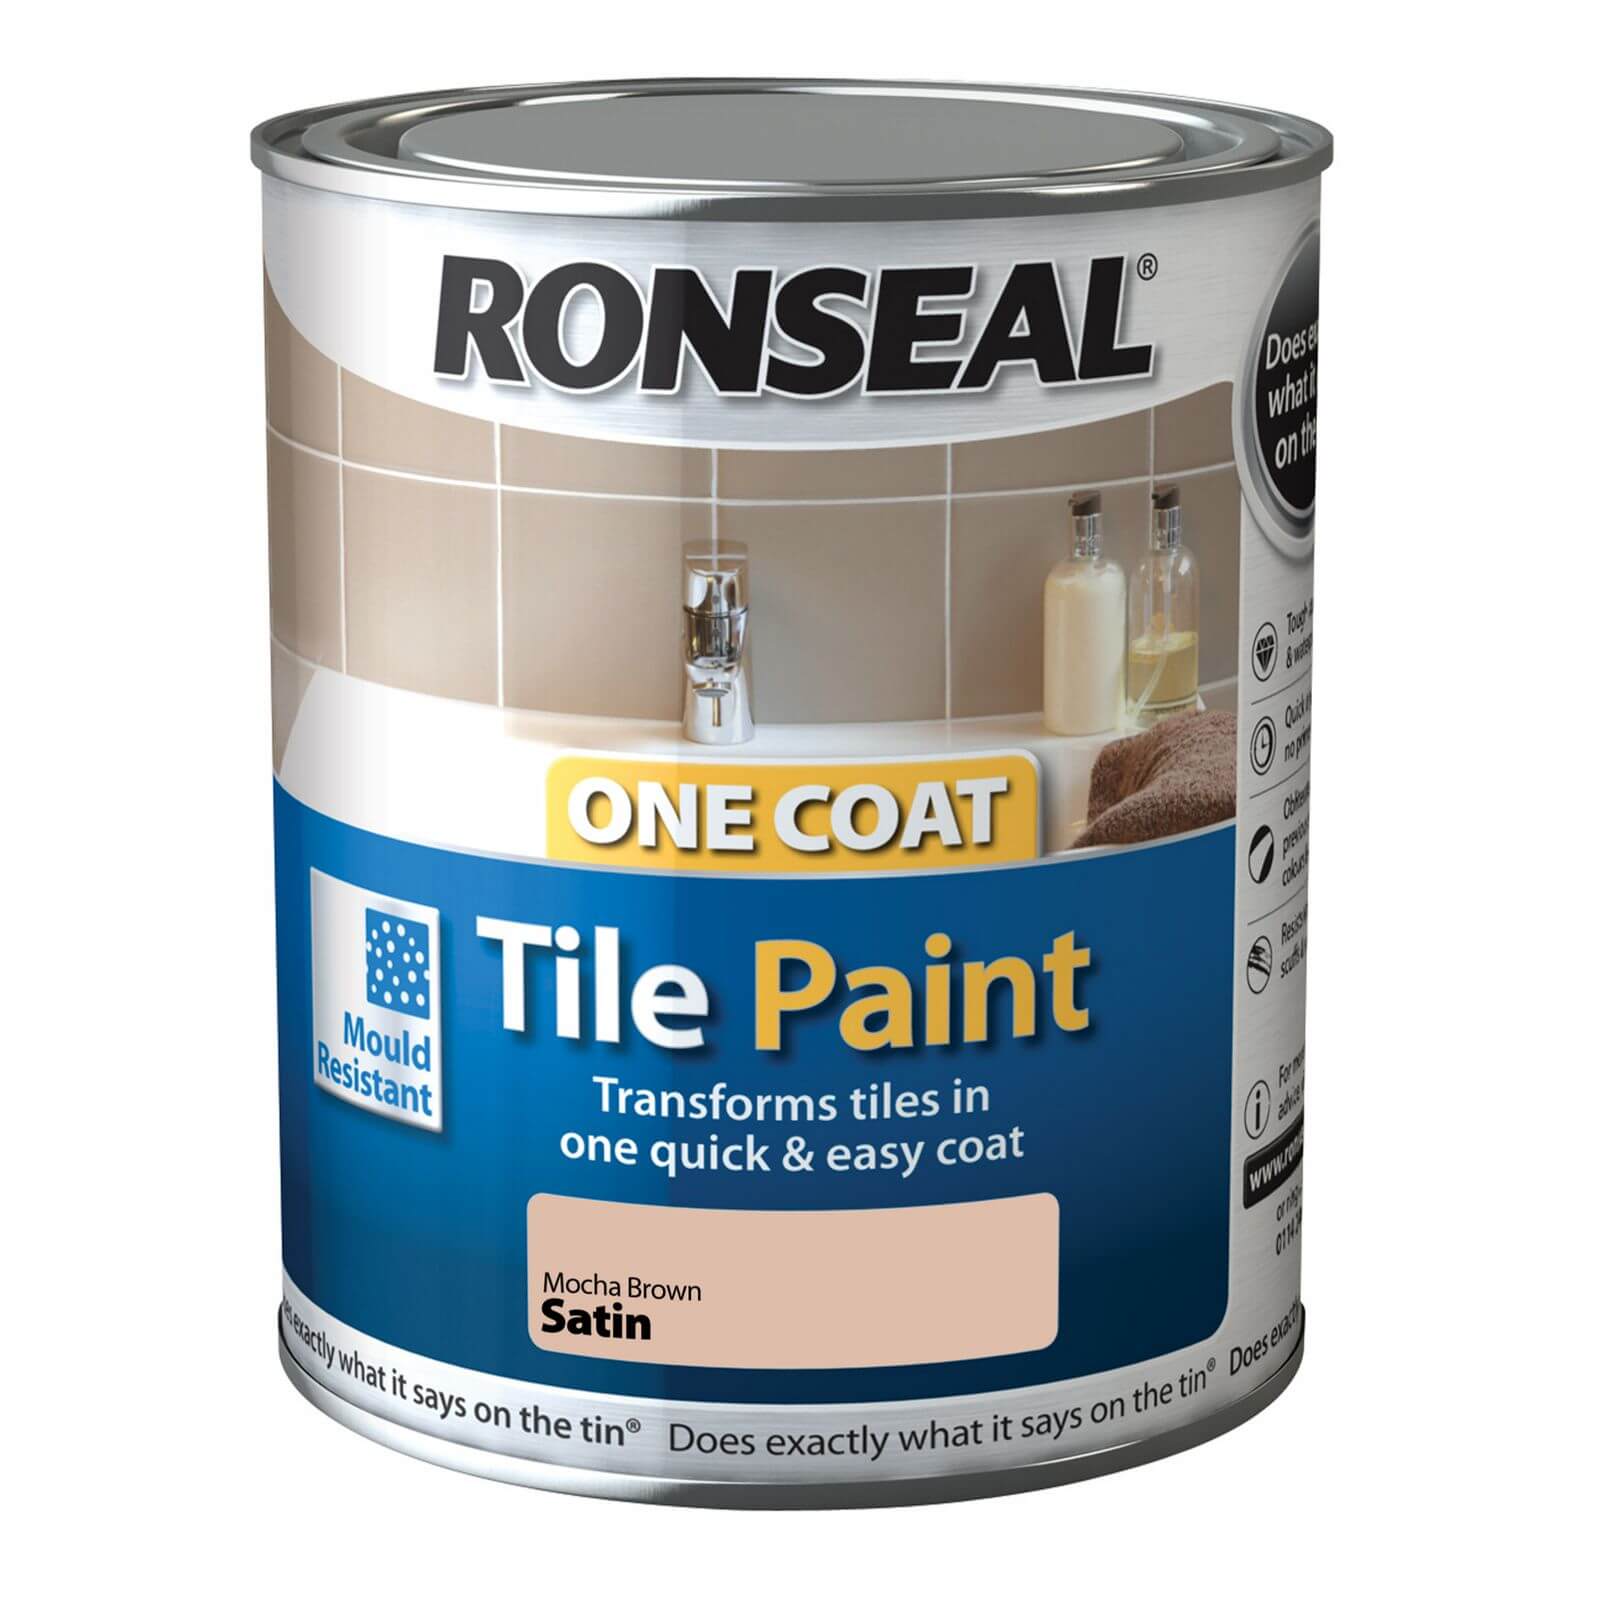 Ronseal One Coat Tile Paint Mocha Brown Satin - 750ml